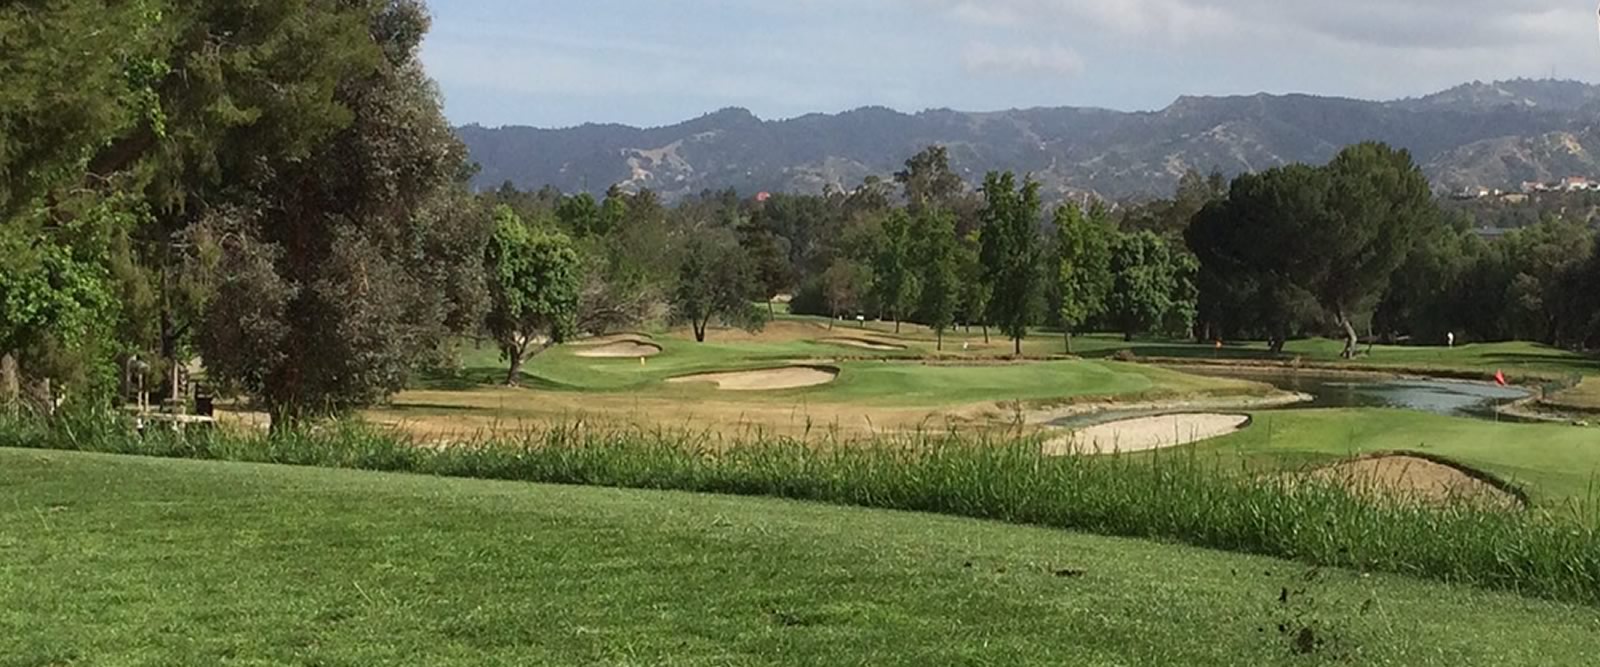 Public Golf Courses In Hollywood Ca Vista Valencia